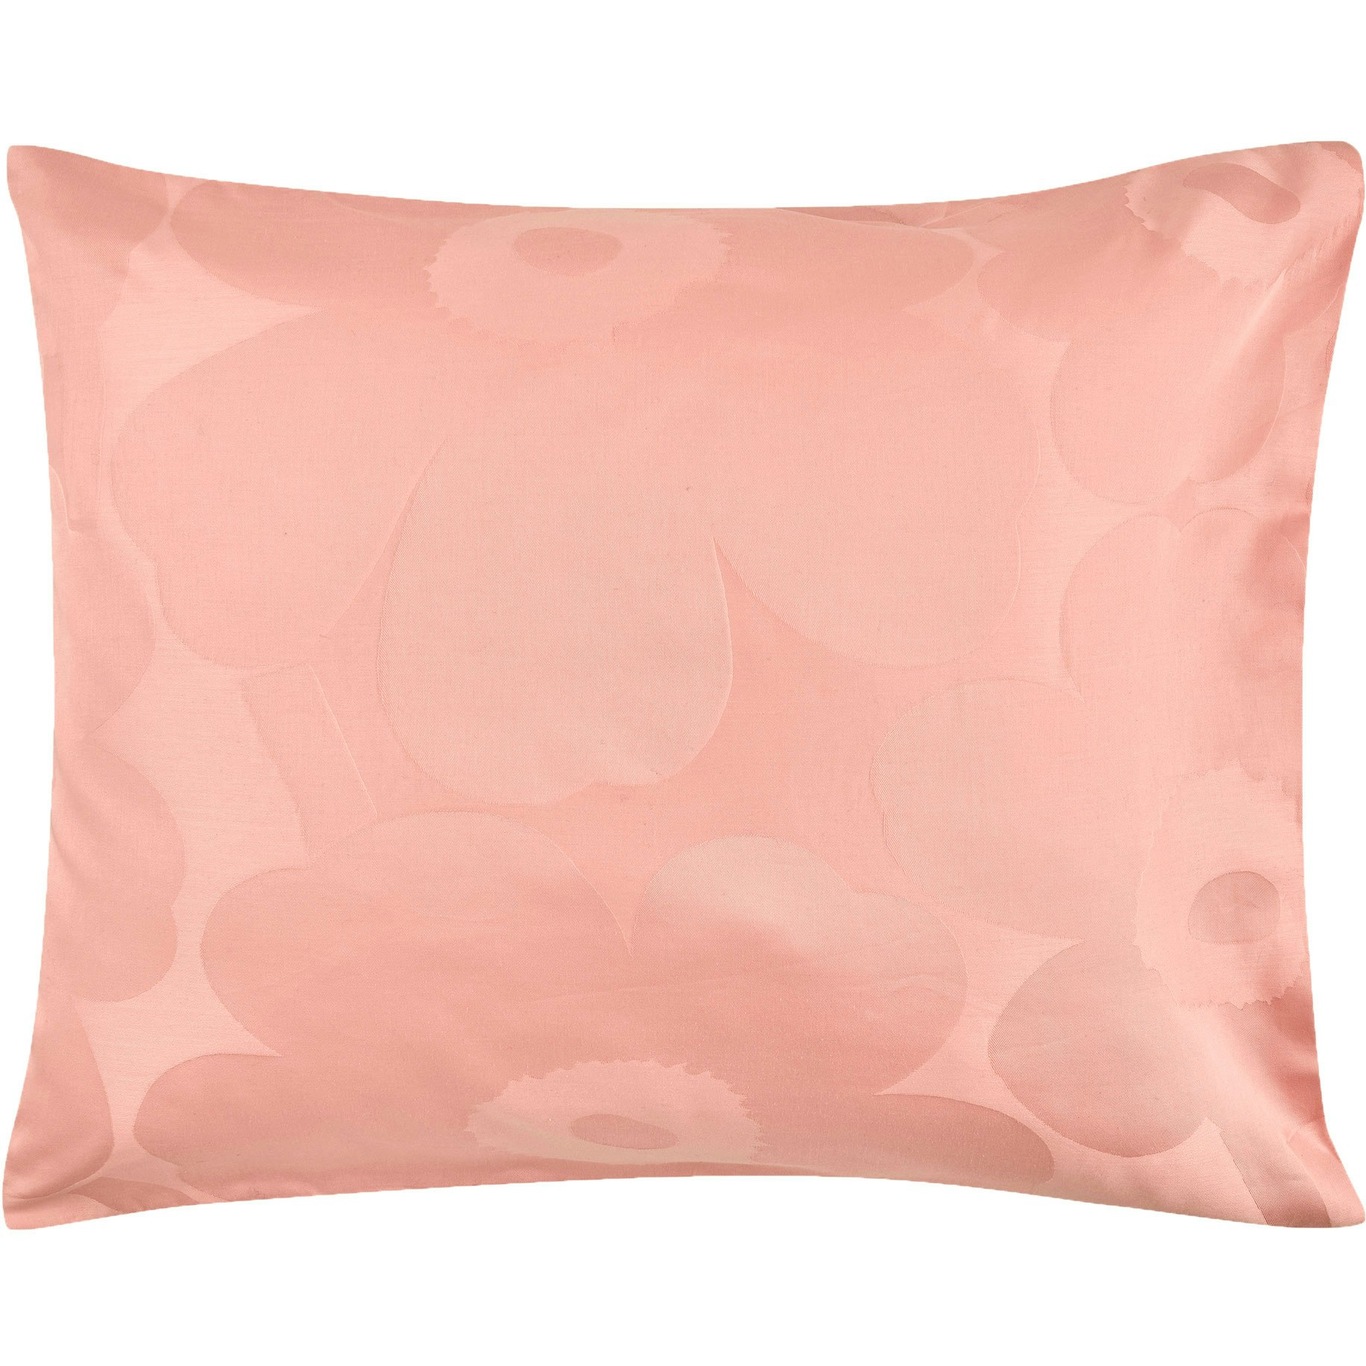 Unikko Jacquard Pillowcase 50x60 cm, Powder Pink